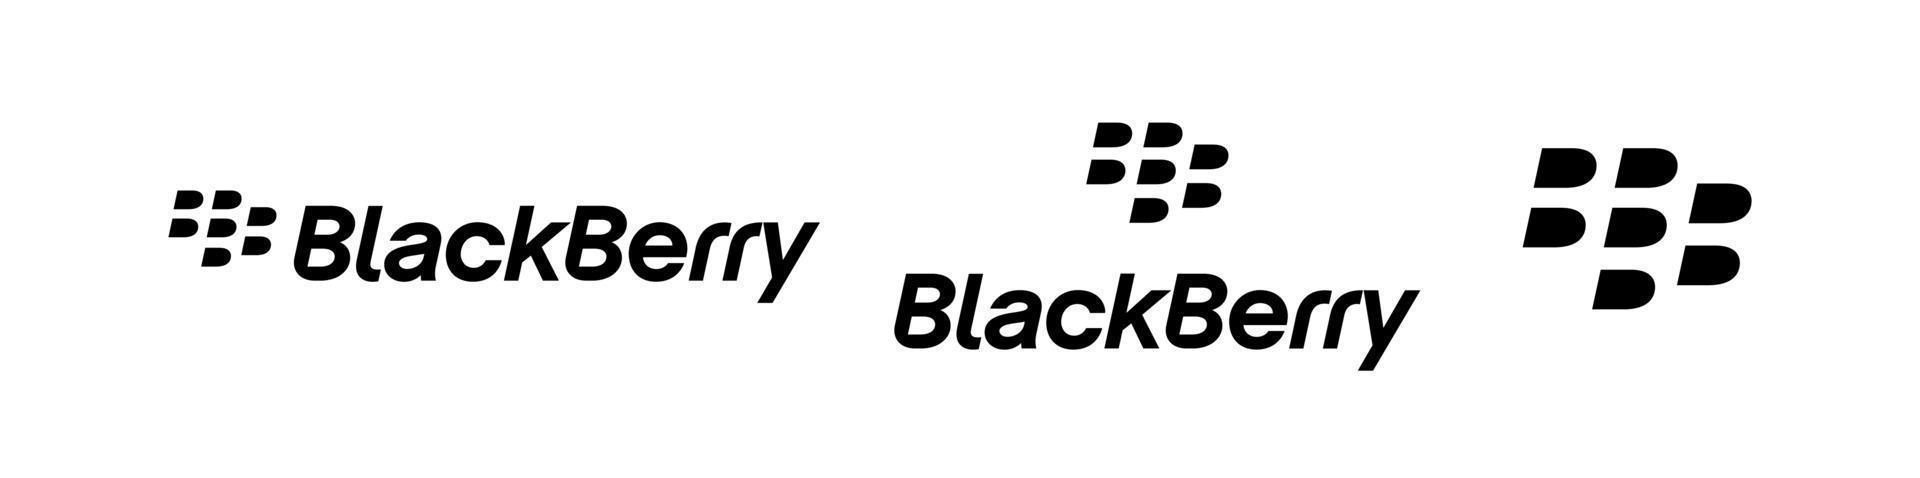 Blackberry logo vector, Blackberry icon free vector